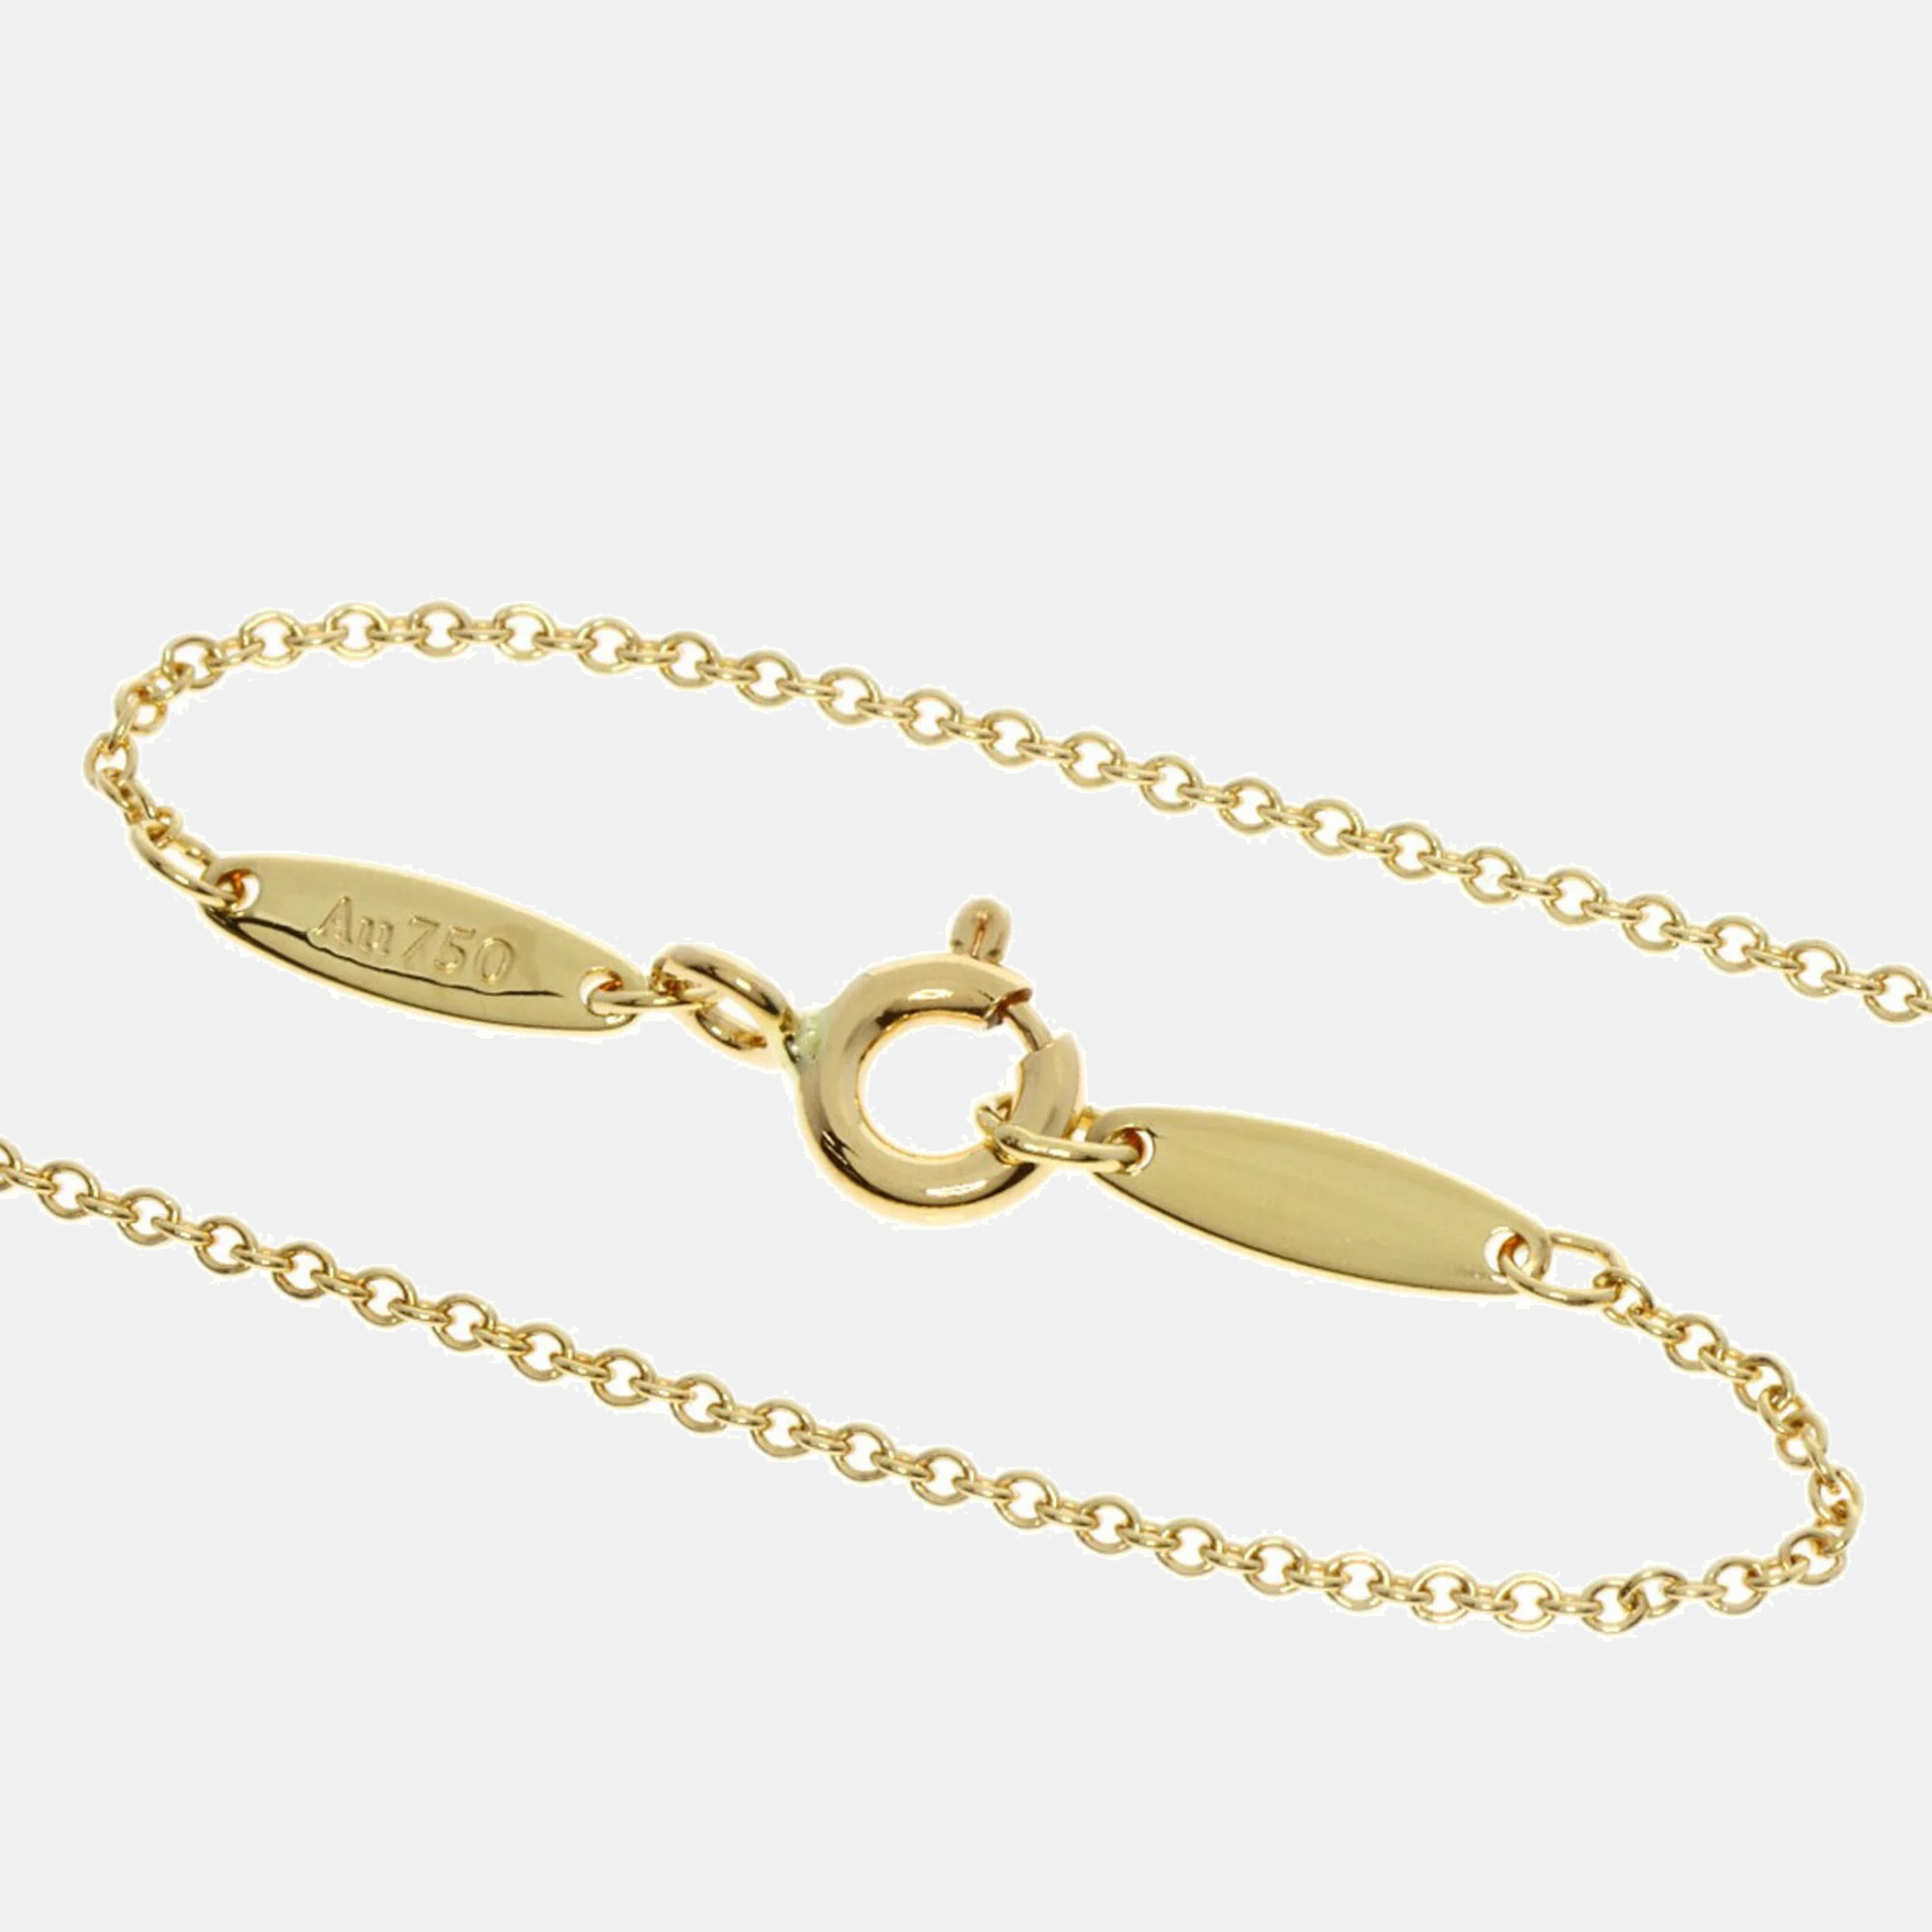 Tiffany & Co. 18K Yellow Gold And Diamond Elsa Peretti Diamonds By The Yard Pendant Necklace